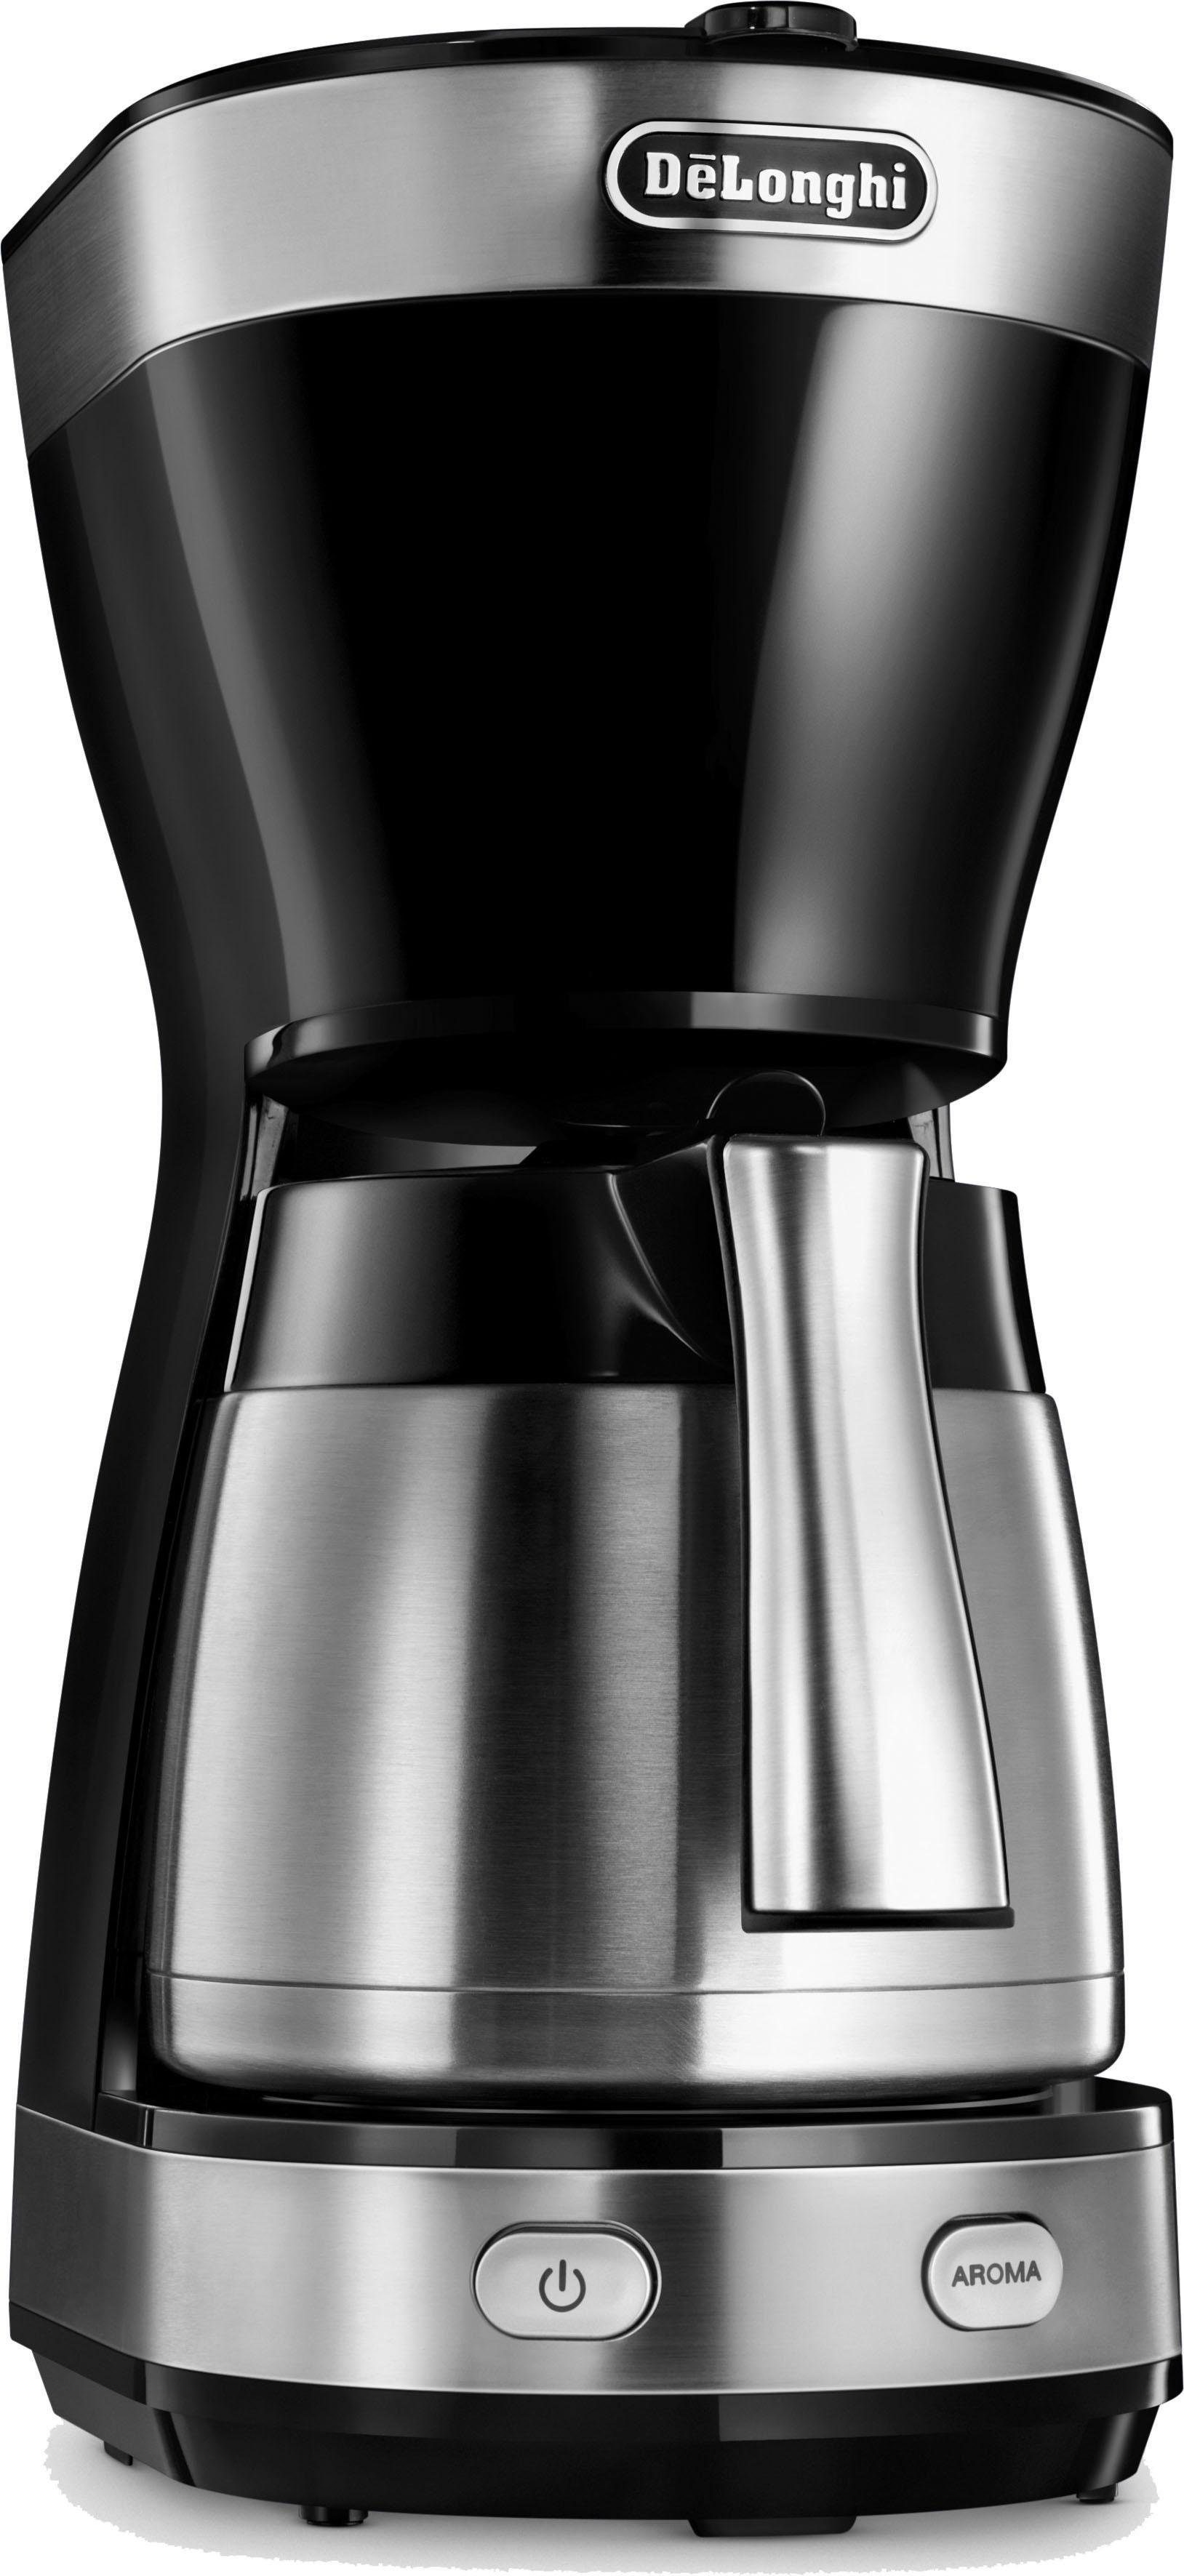 De'Longhi Filterkaffeemaschine ICM 16710, 1,25l Kaffeekanne, Papierfilter